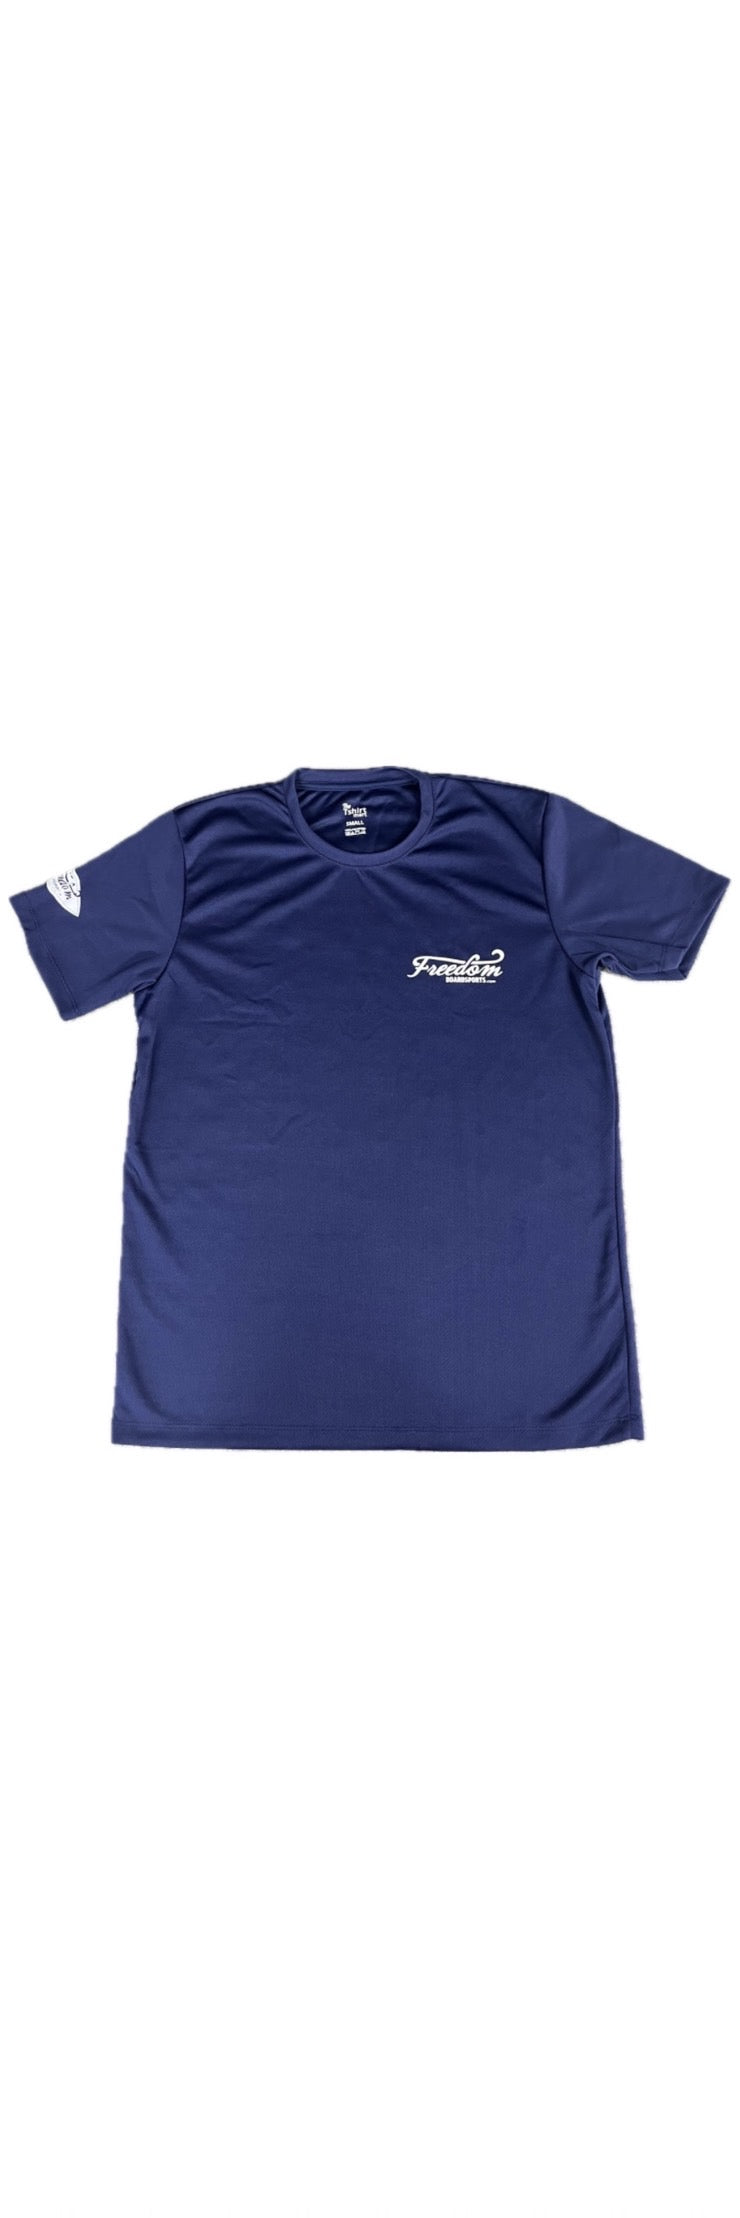 Freedom Boardsports Poly T-Shirt